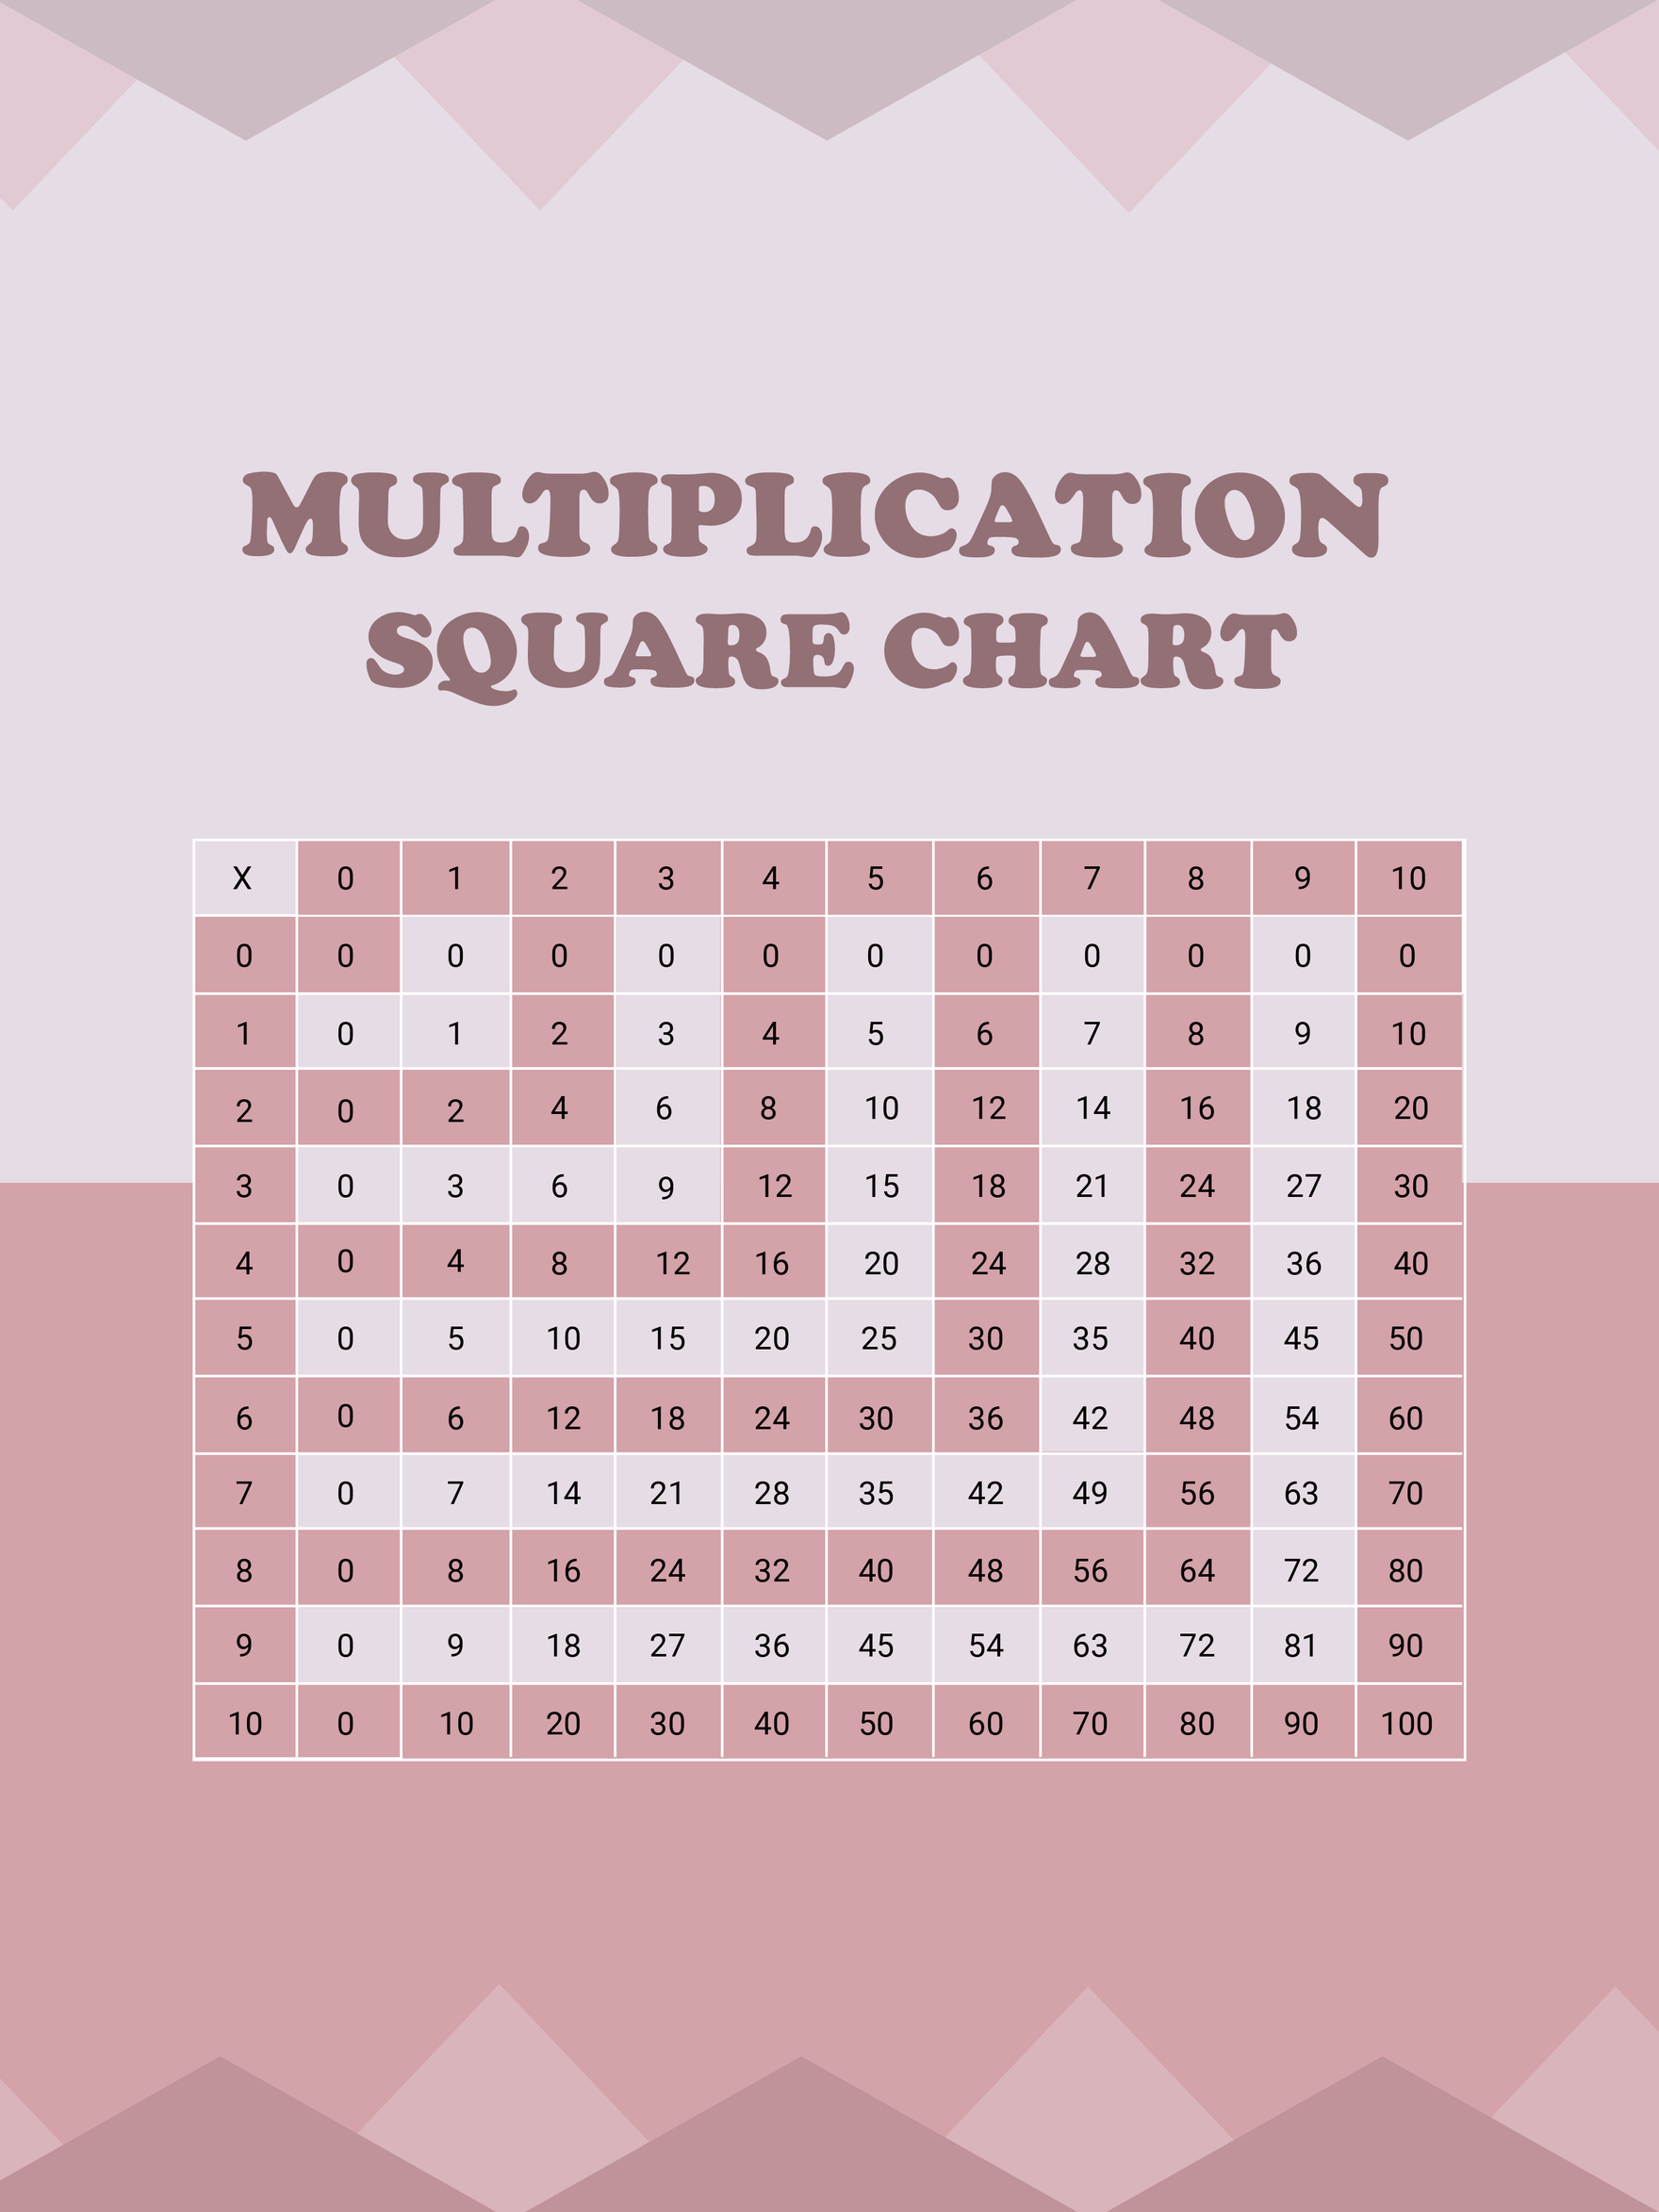 Multiplication Square  Chart in PDF, Illustrator